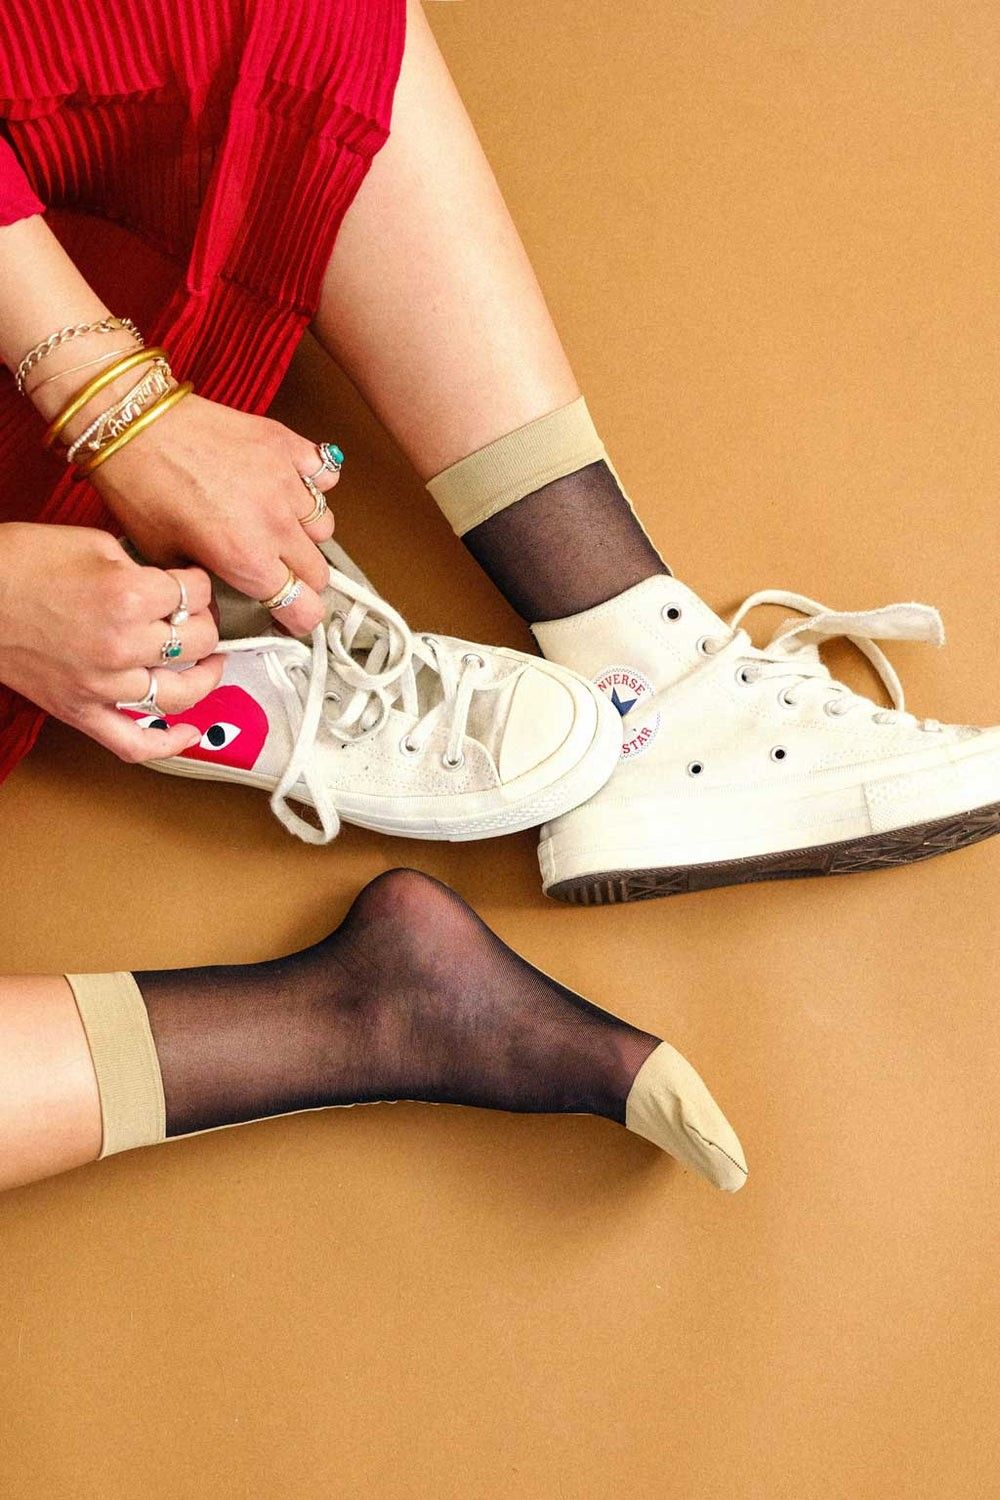 8 Pairs Sheer Socks For Women, Vintage Embroidered Floral Socks